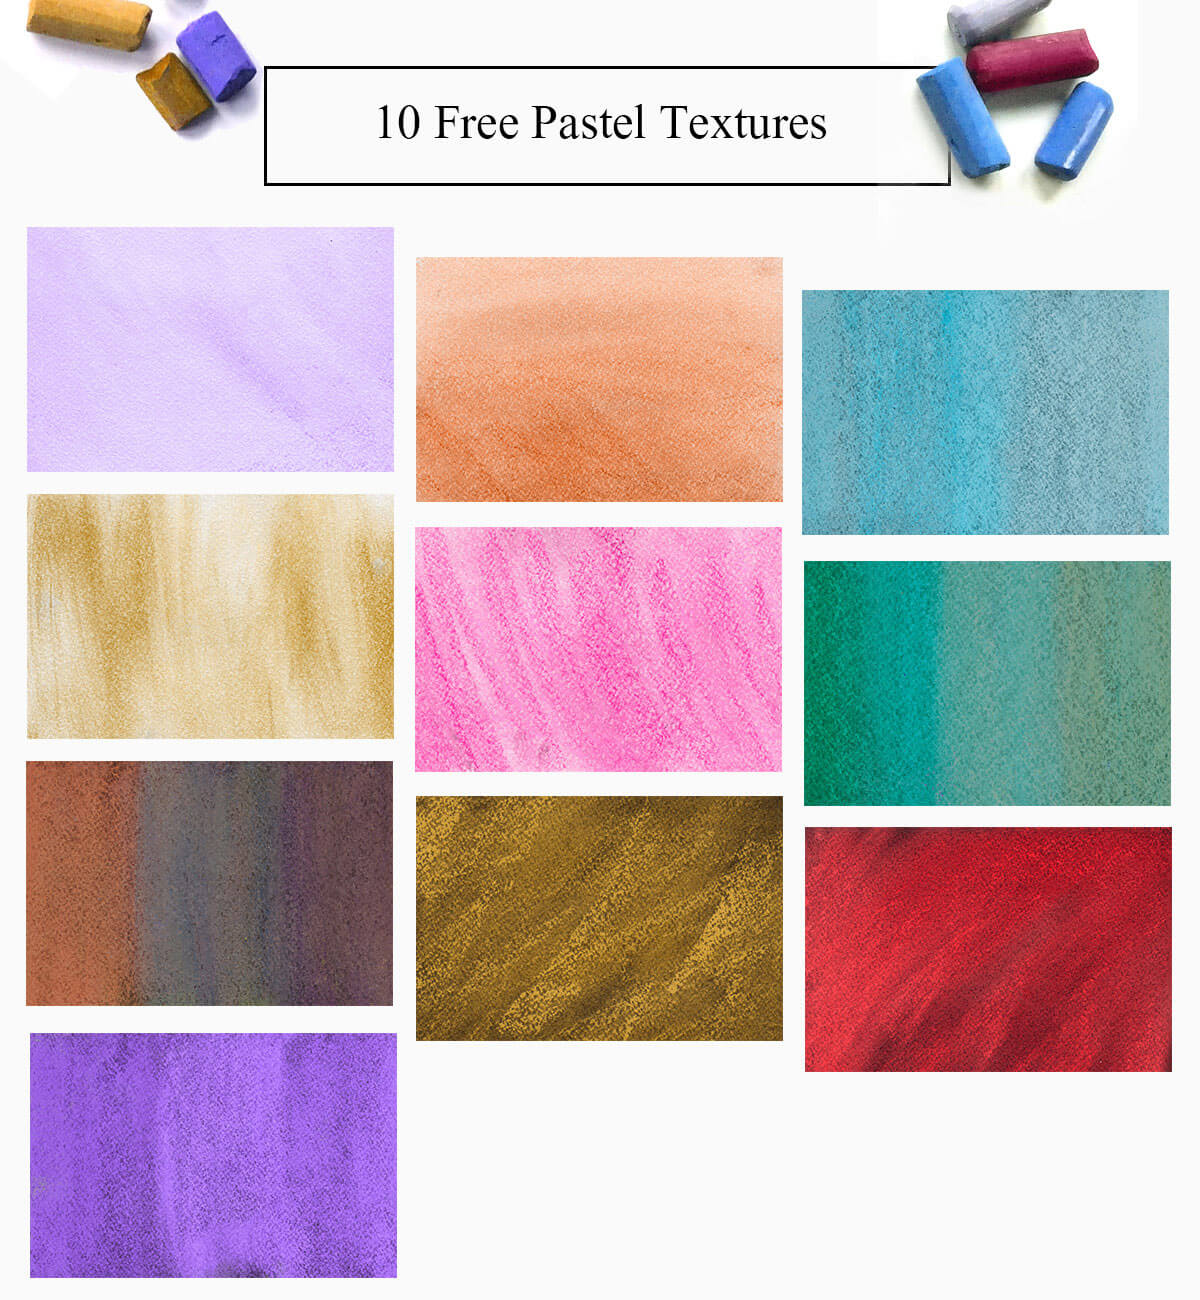 10 Free Pastel Textures